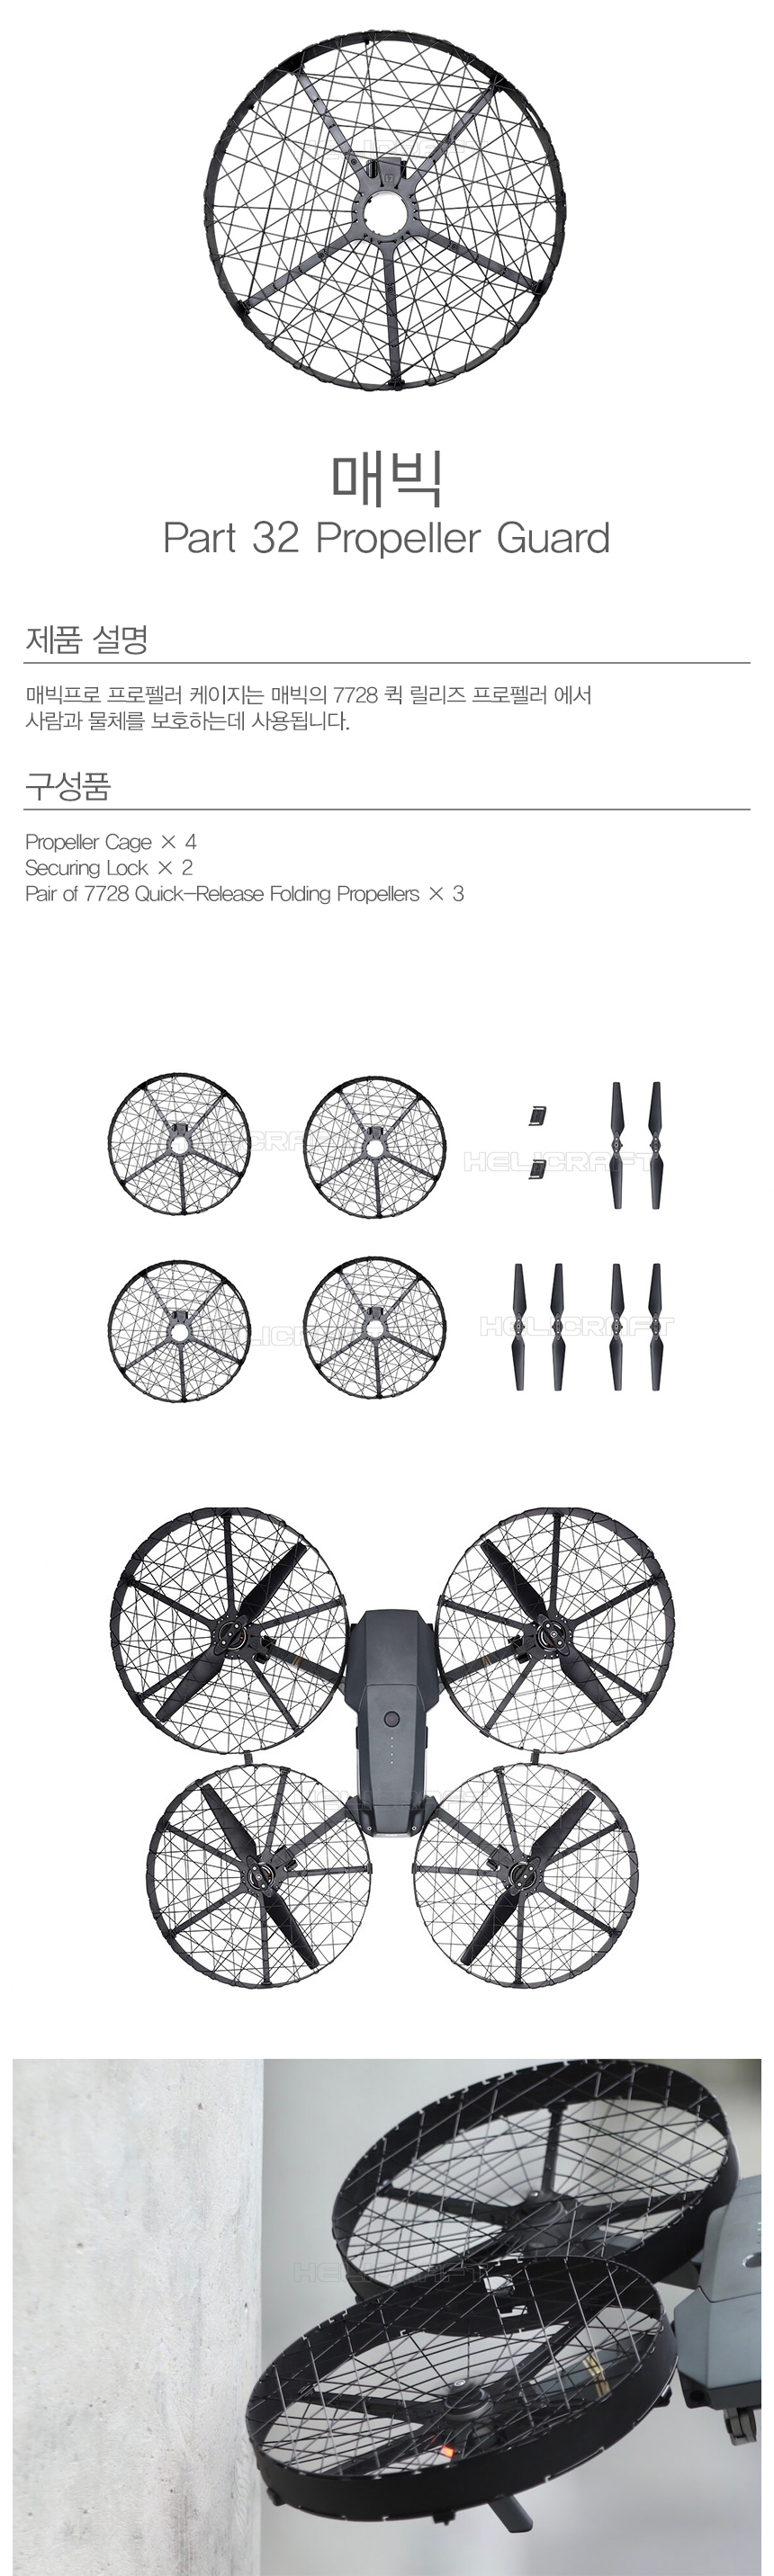 DJI 매빅 프로팰러 케이스 Mavic part 31 propeller cage 